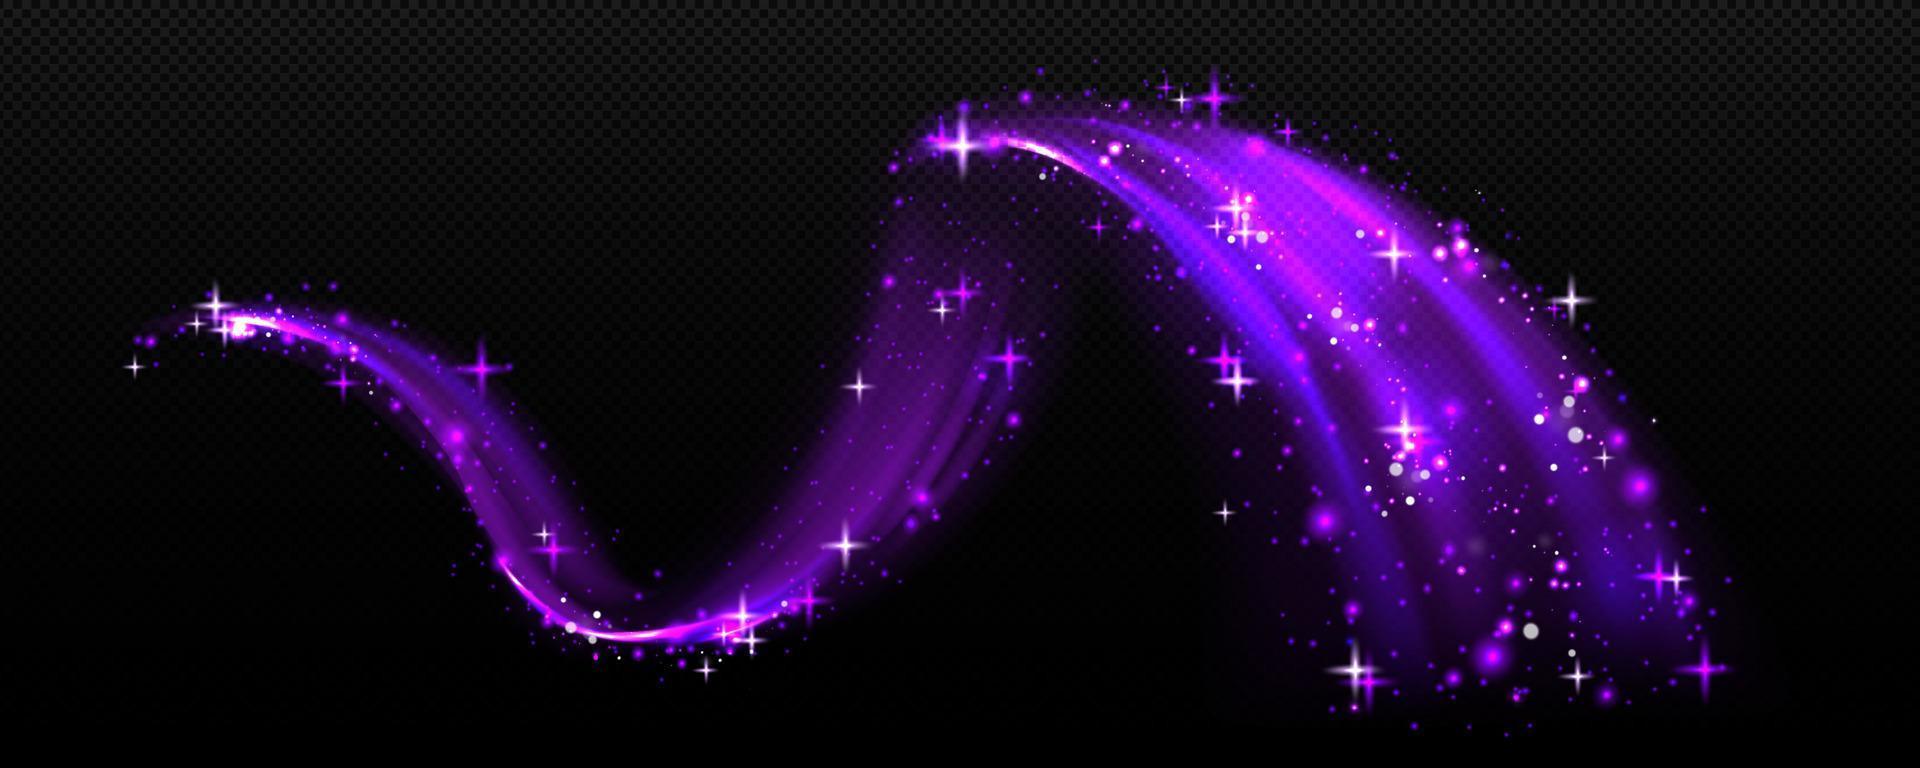 Magic effect, purple air swirl with white stars vector